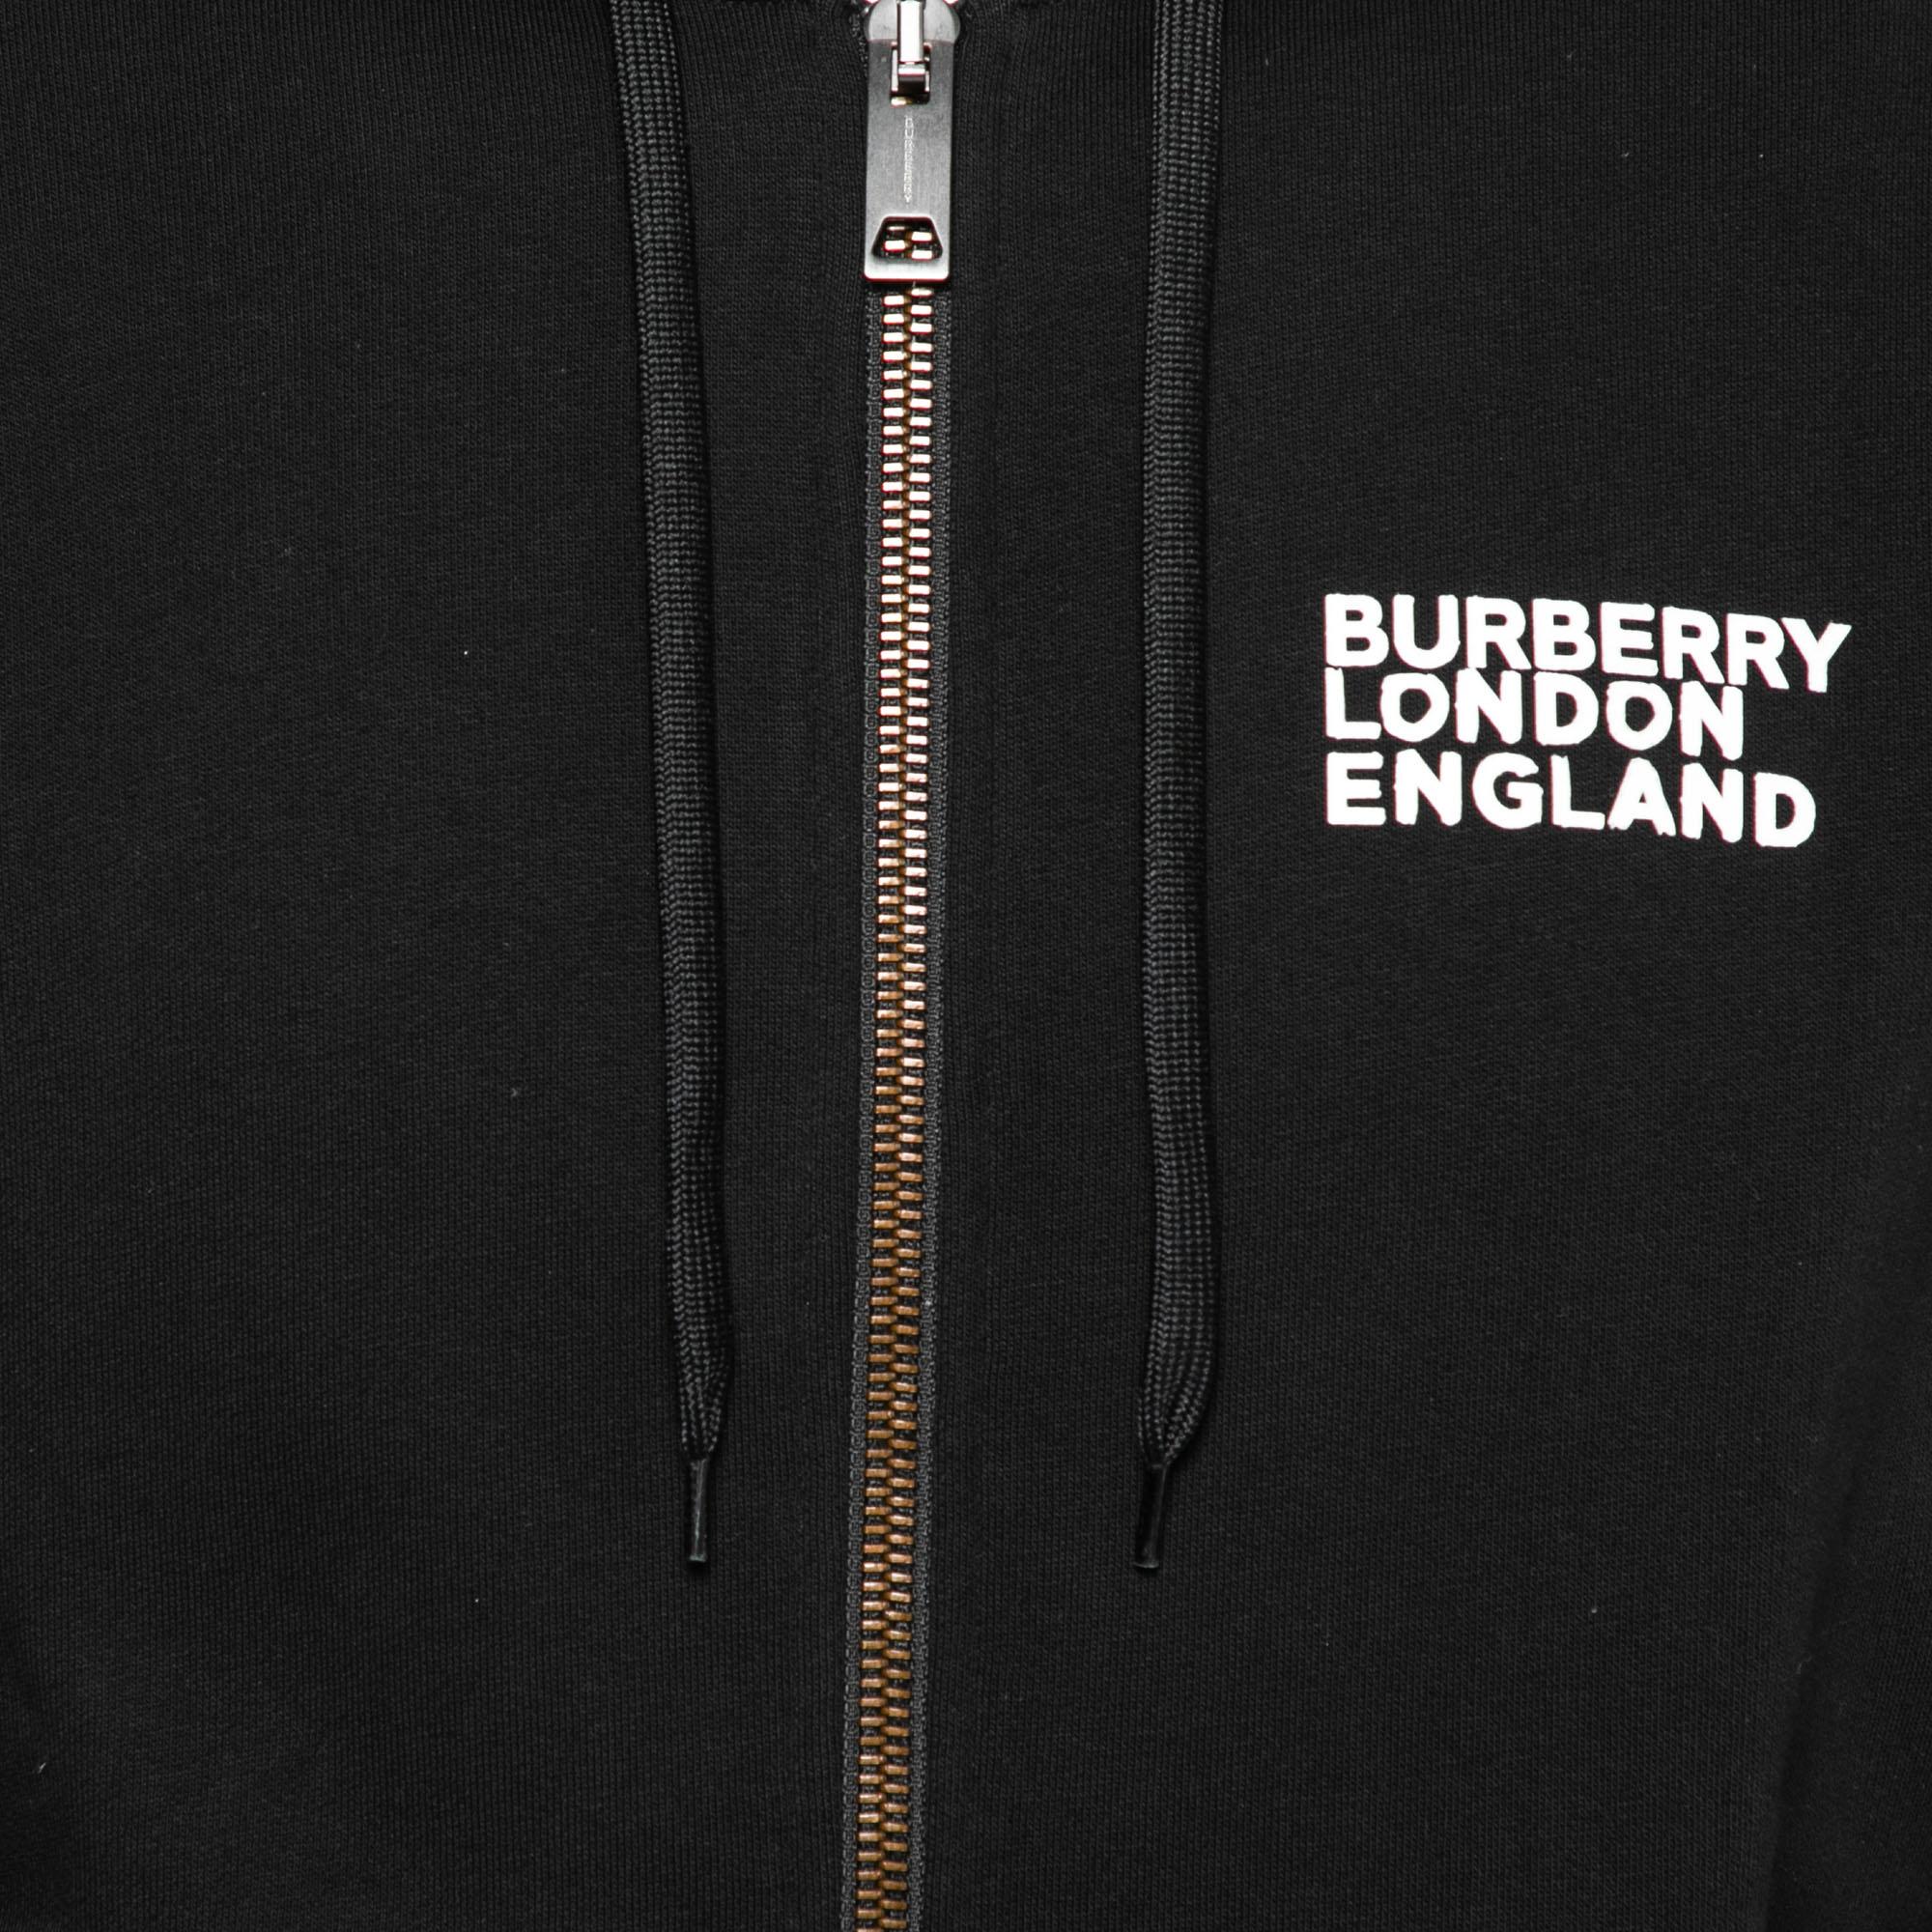 burberry london england jacket